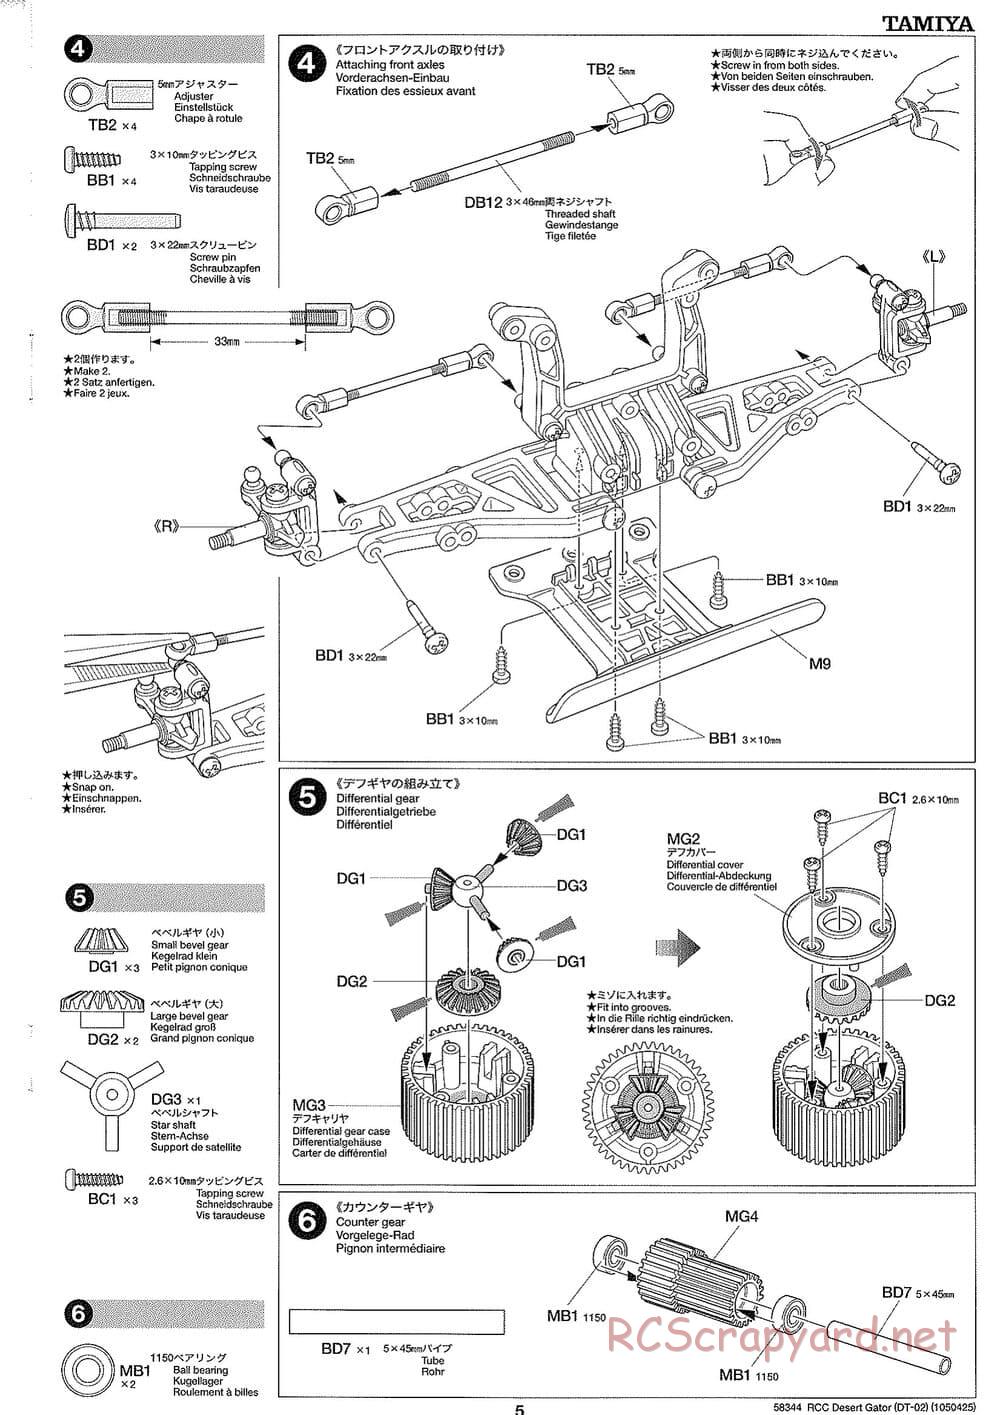 Tamiya - Desert Gator Chassis - Manual - Page 5